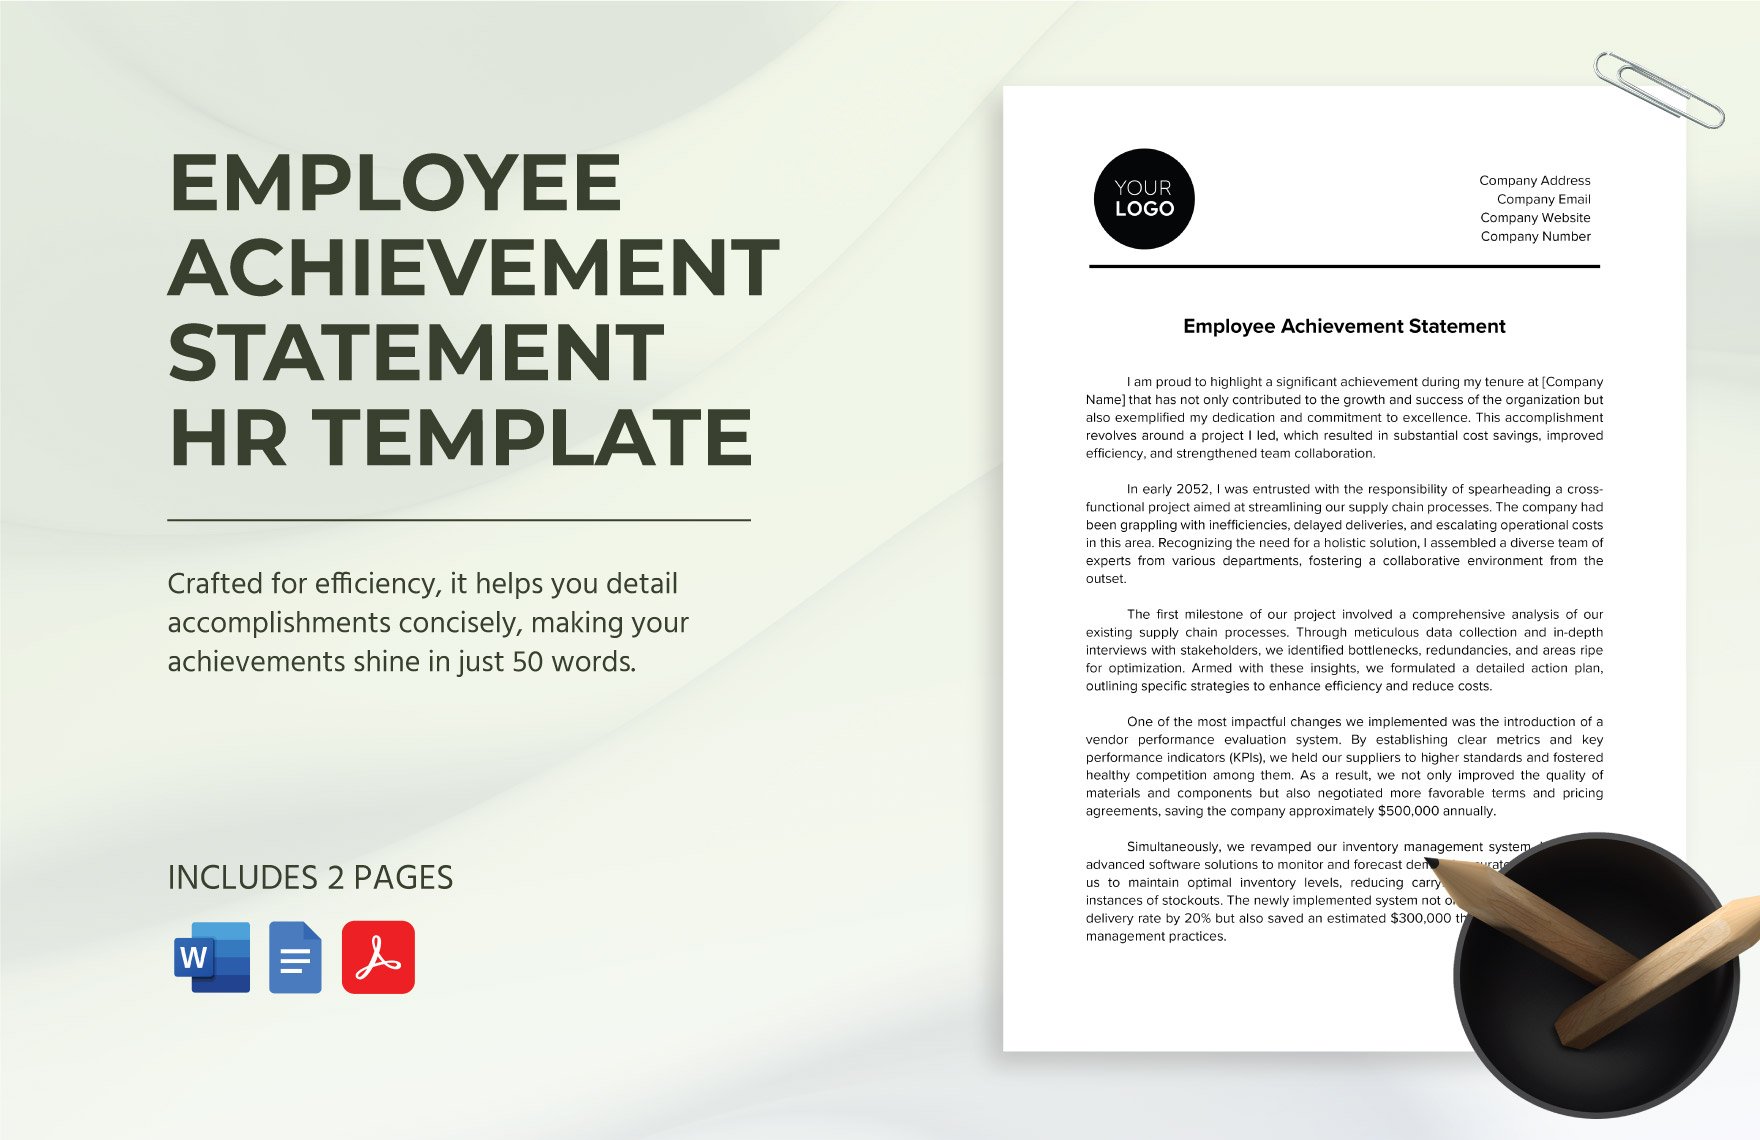 Employee Achievement Statement HR Template in Word, Google Docs, PDF